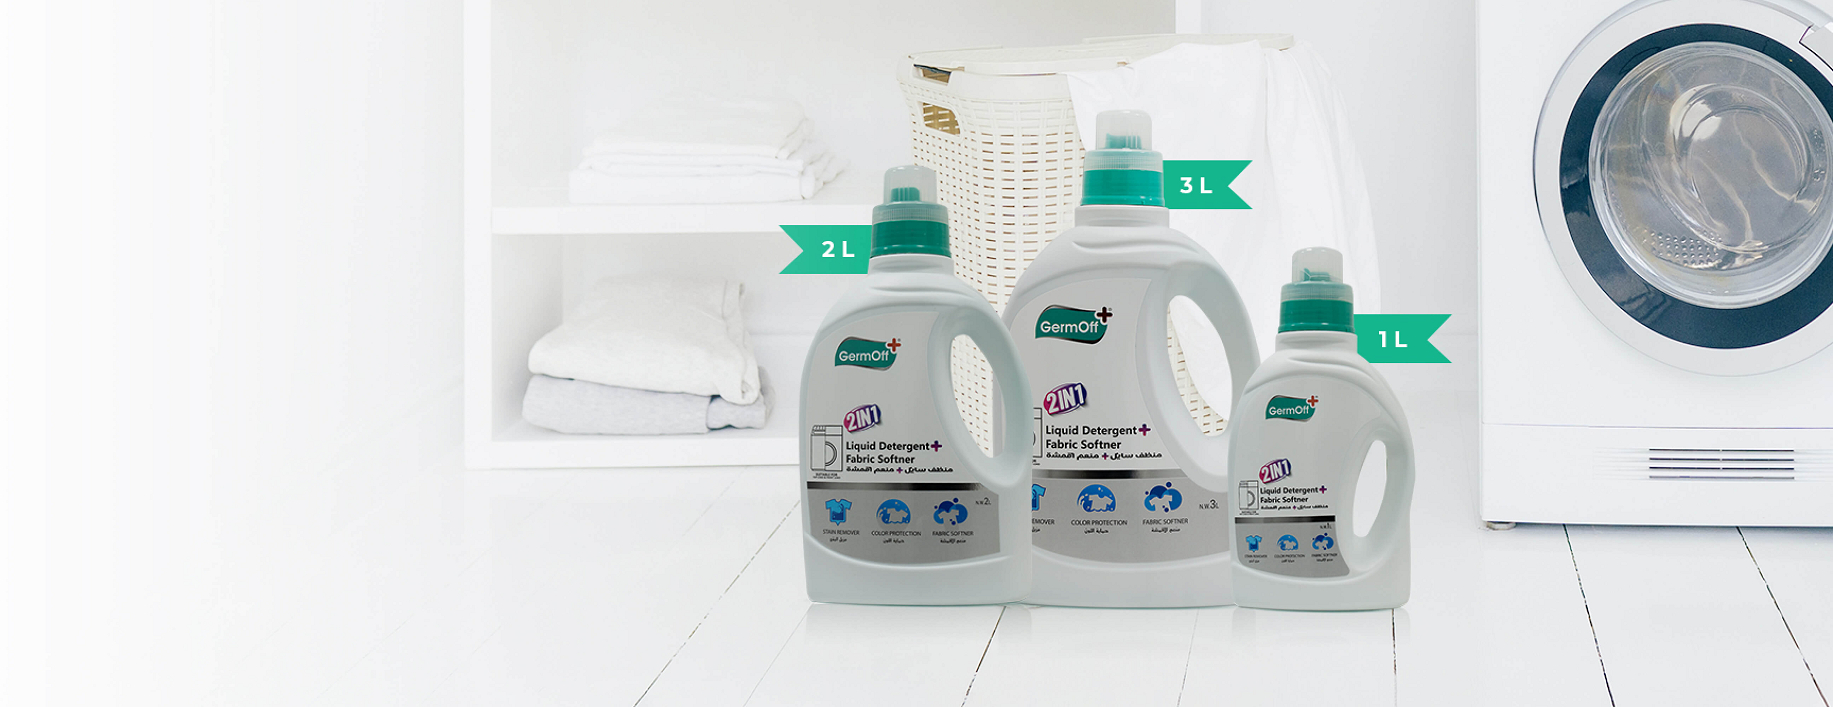 Detergent Manufacturers in UAE